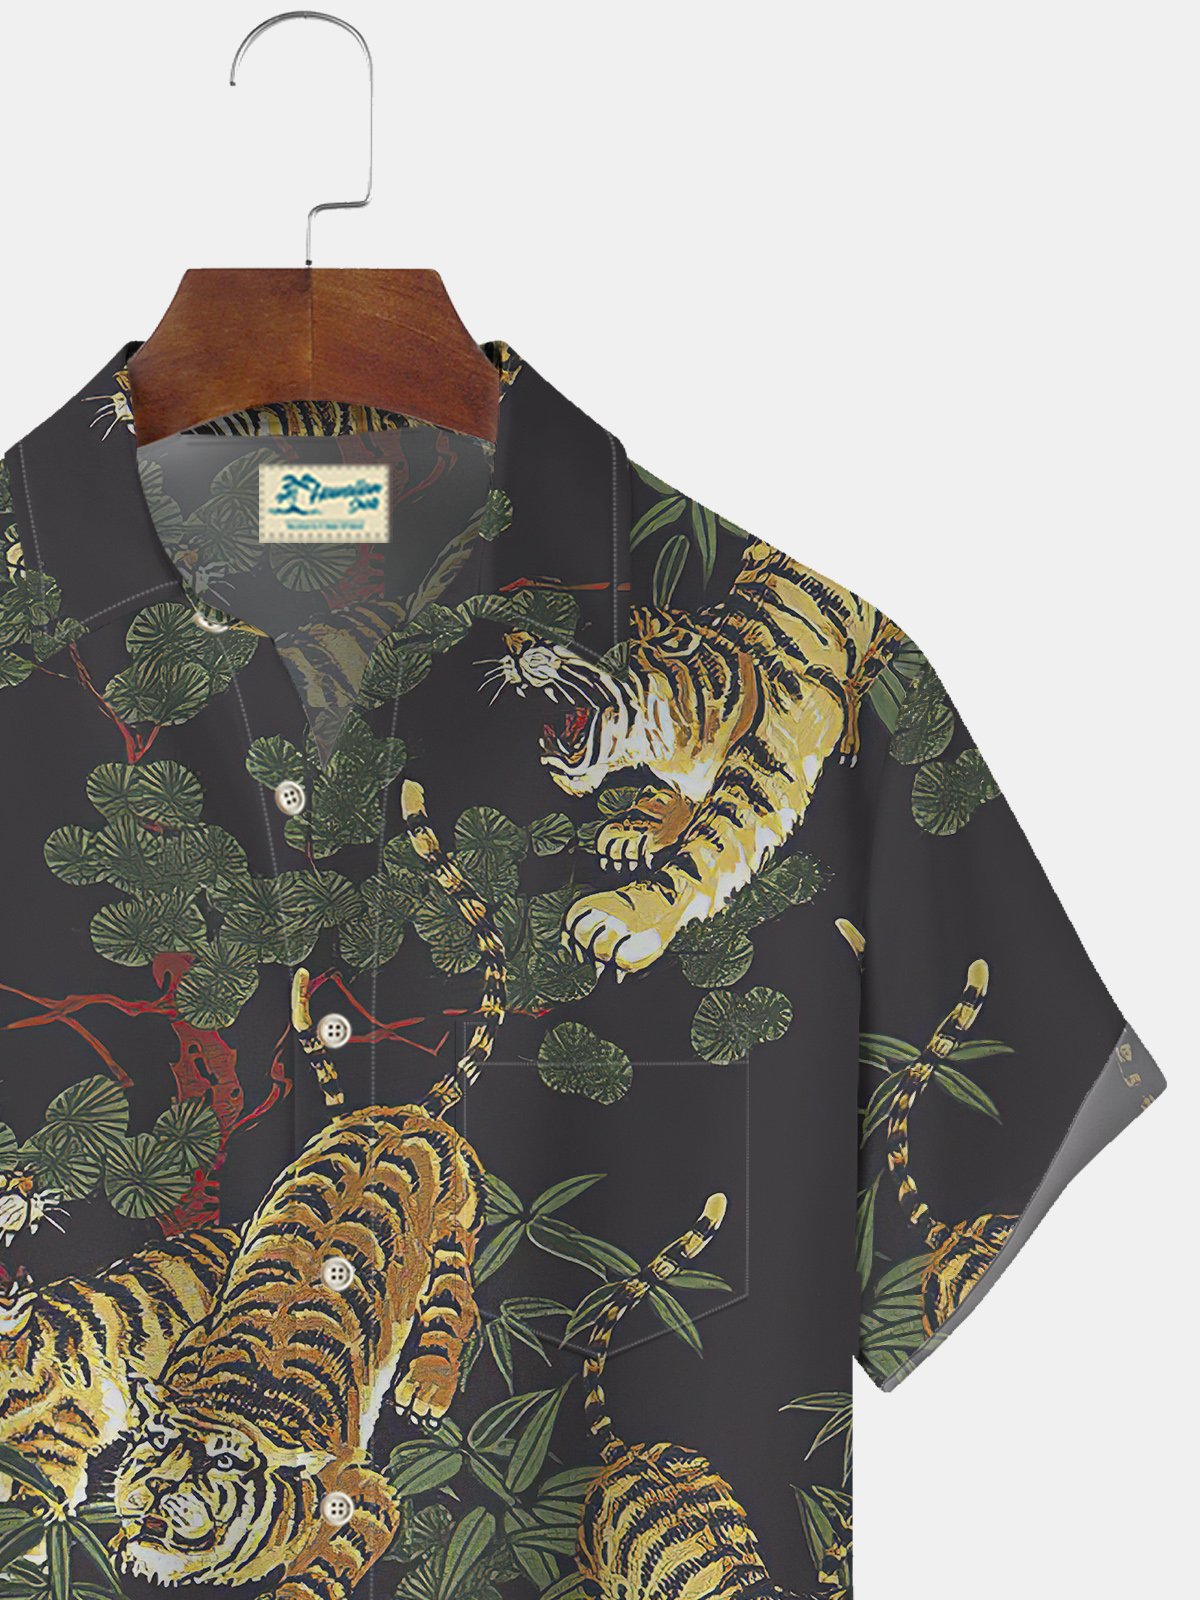 JoyMitty  Botanical tiger Print Beach Men's Hawaiian  Shirt with Pockets